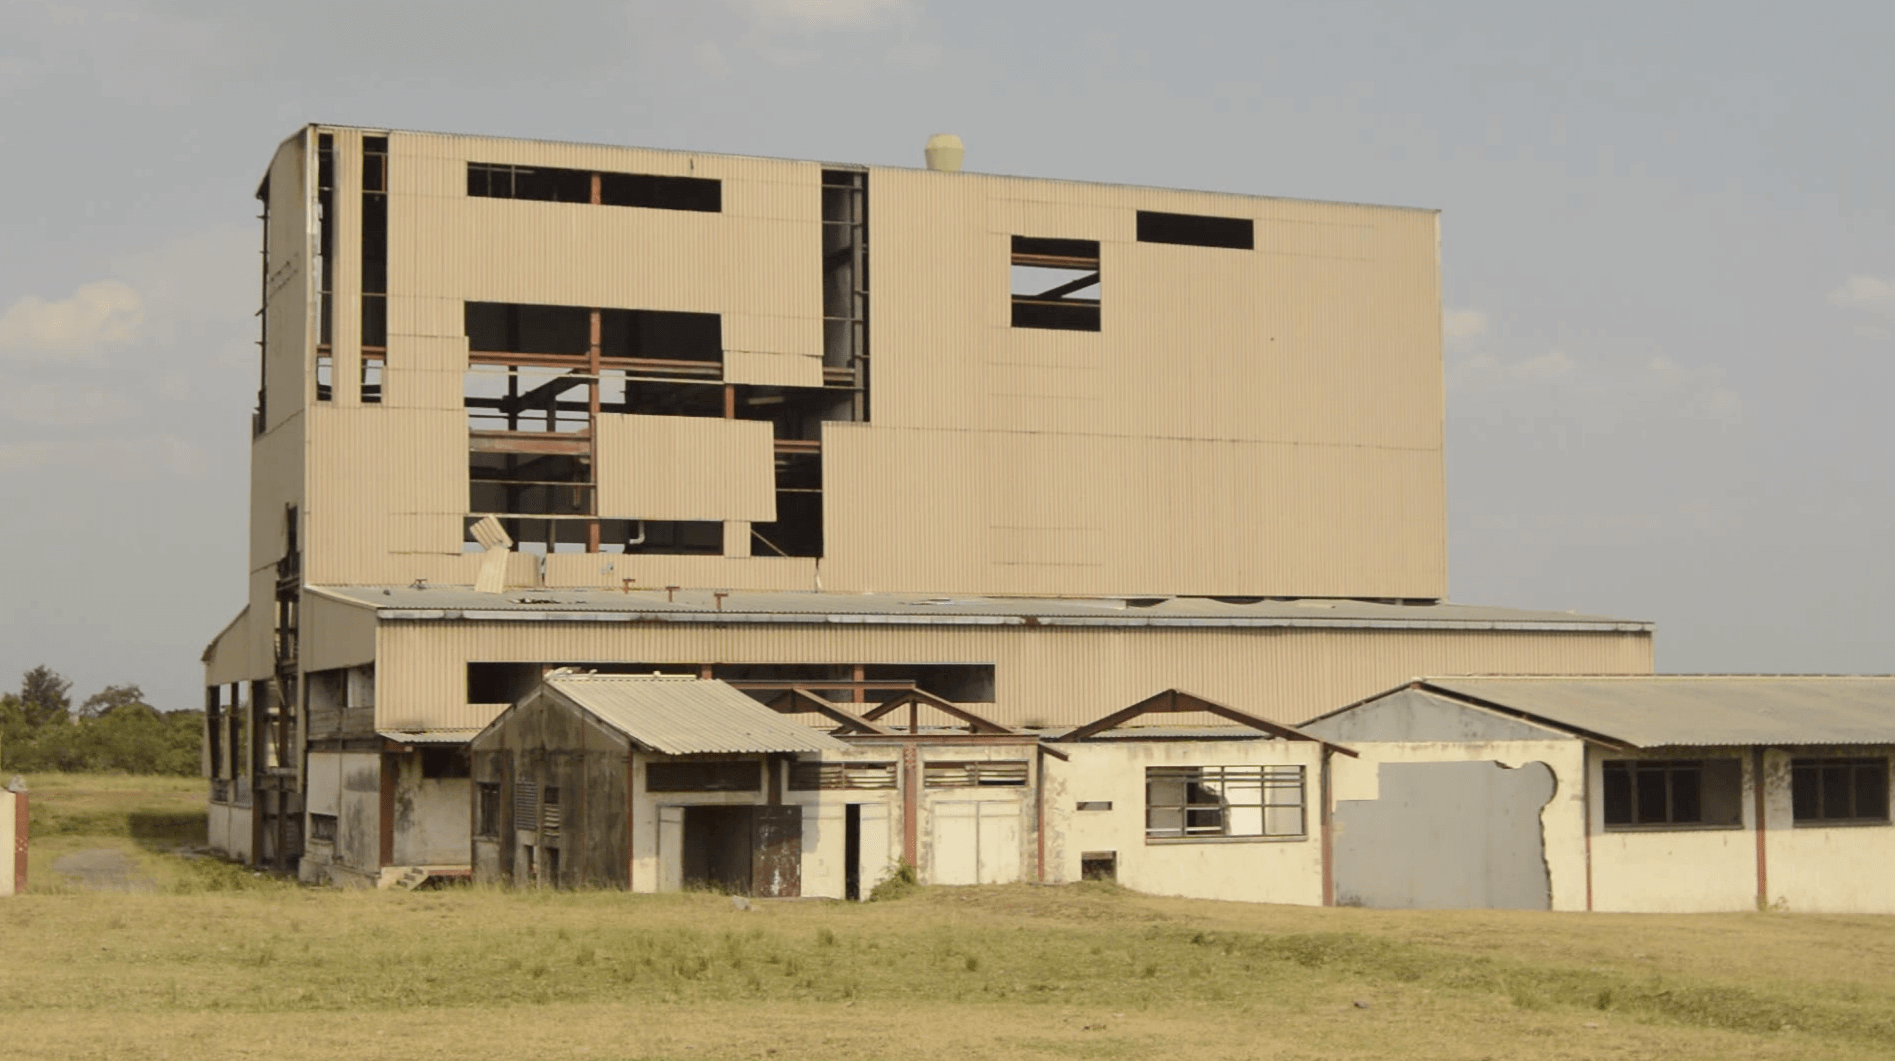 The Katwe Salt Mining Factory Lies Idle